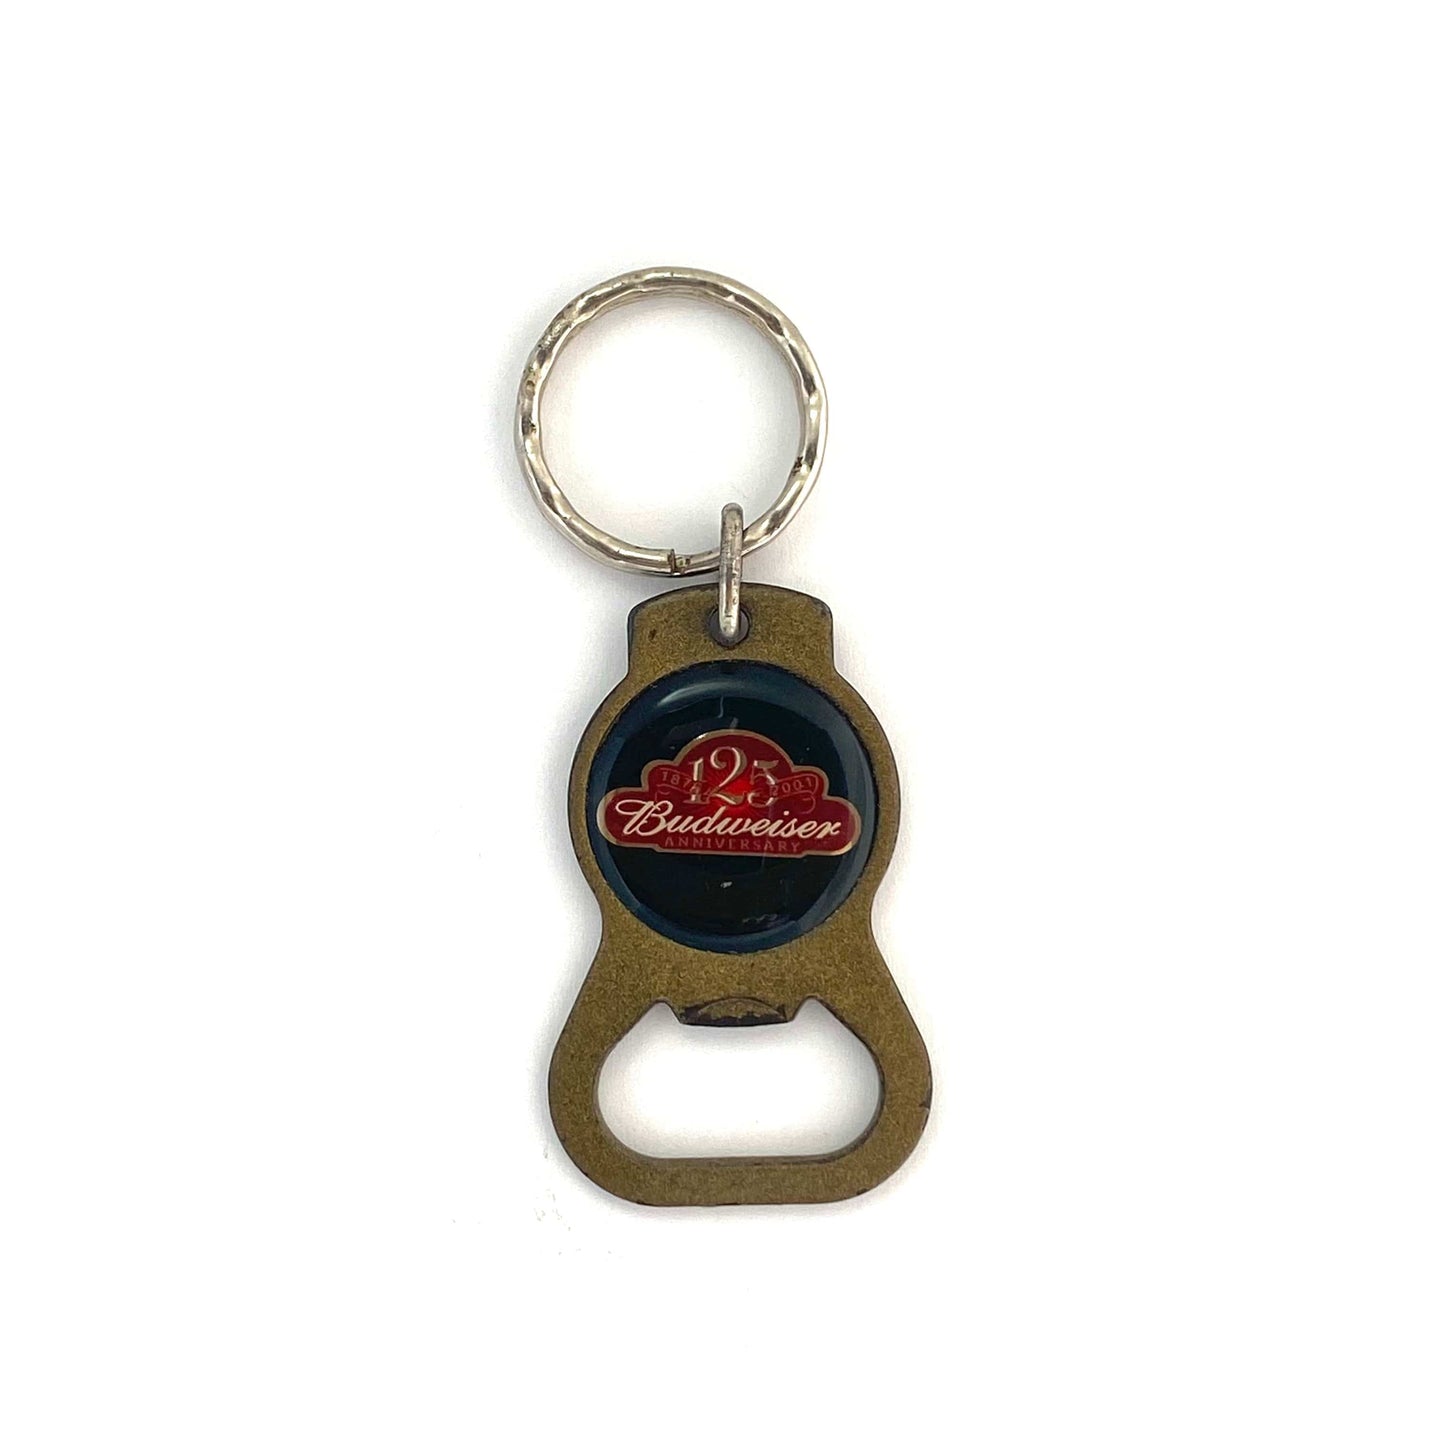 Vintage “Budweiser 125 Years” Metal Beer Bottle Opener Collectible Keychain